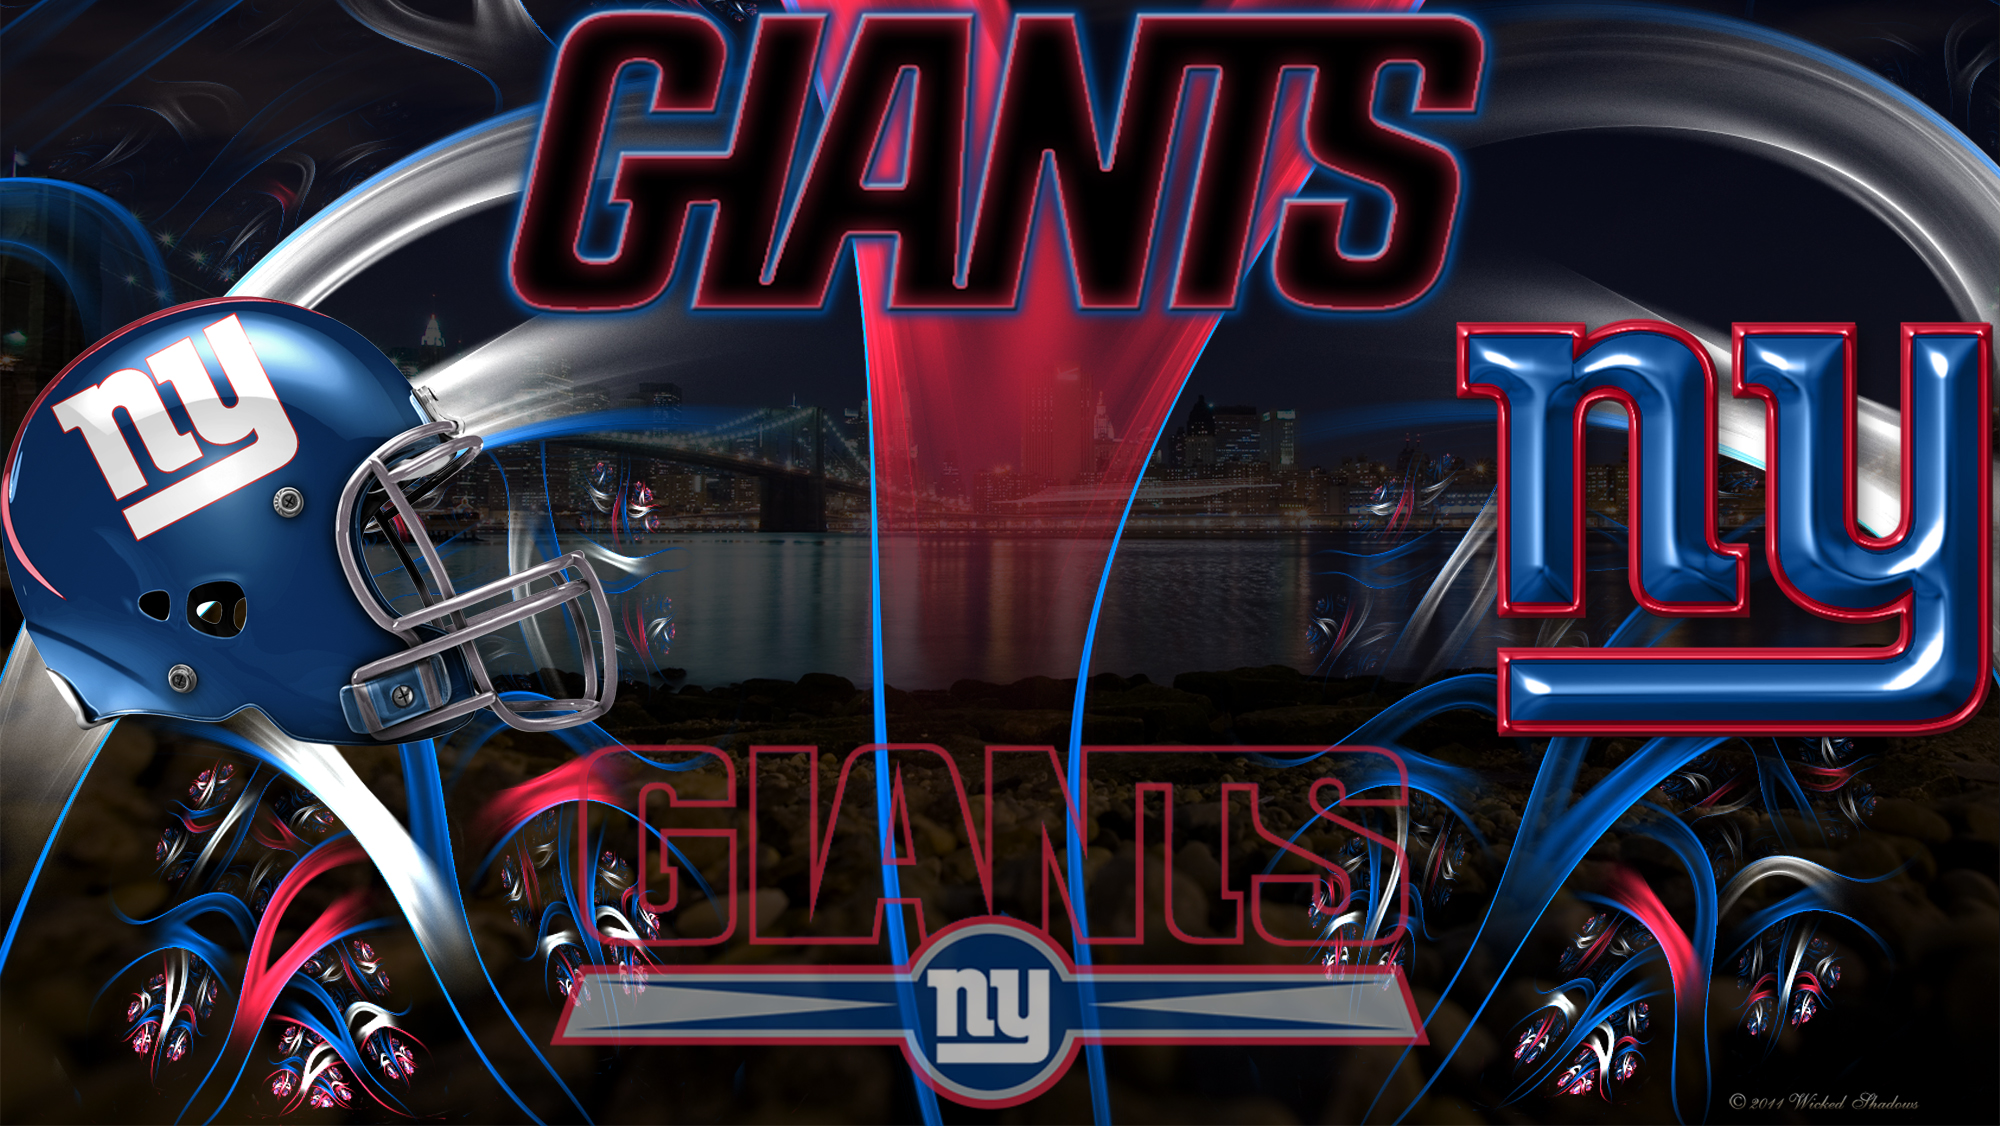 New York Giants images New York Giants wallpapers 2000x1126